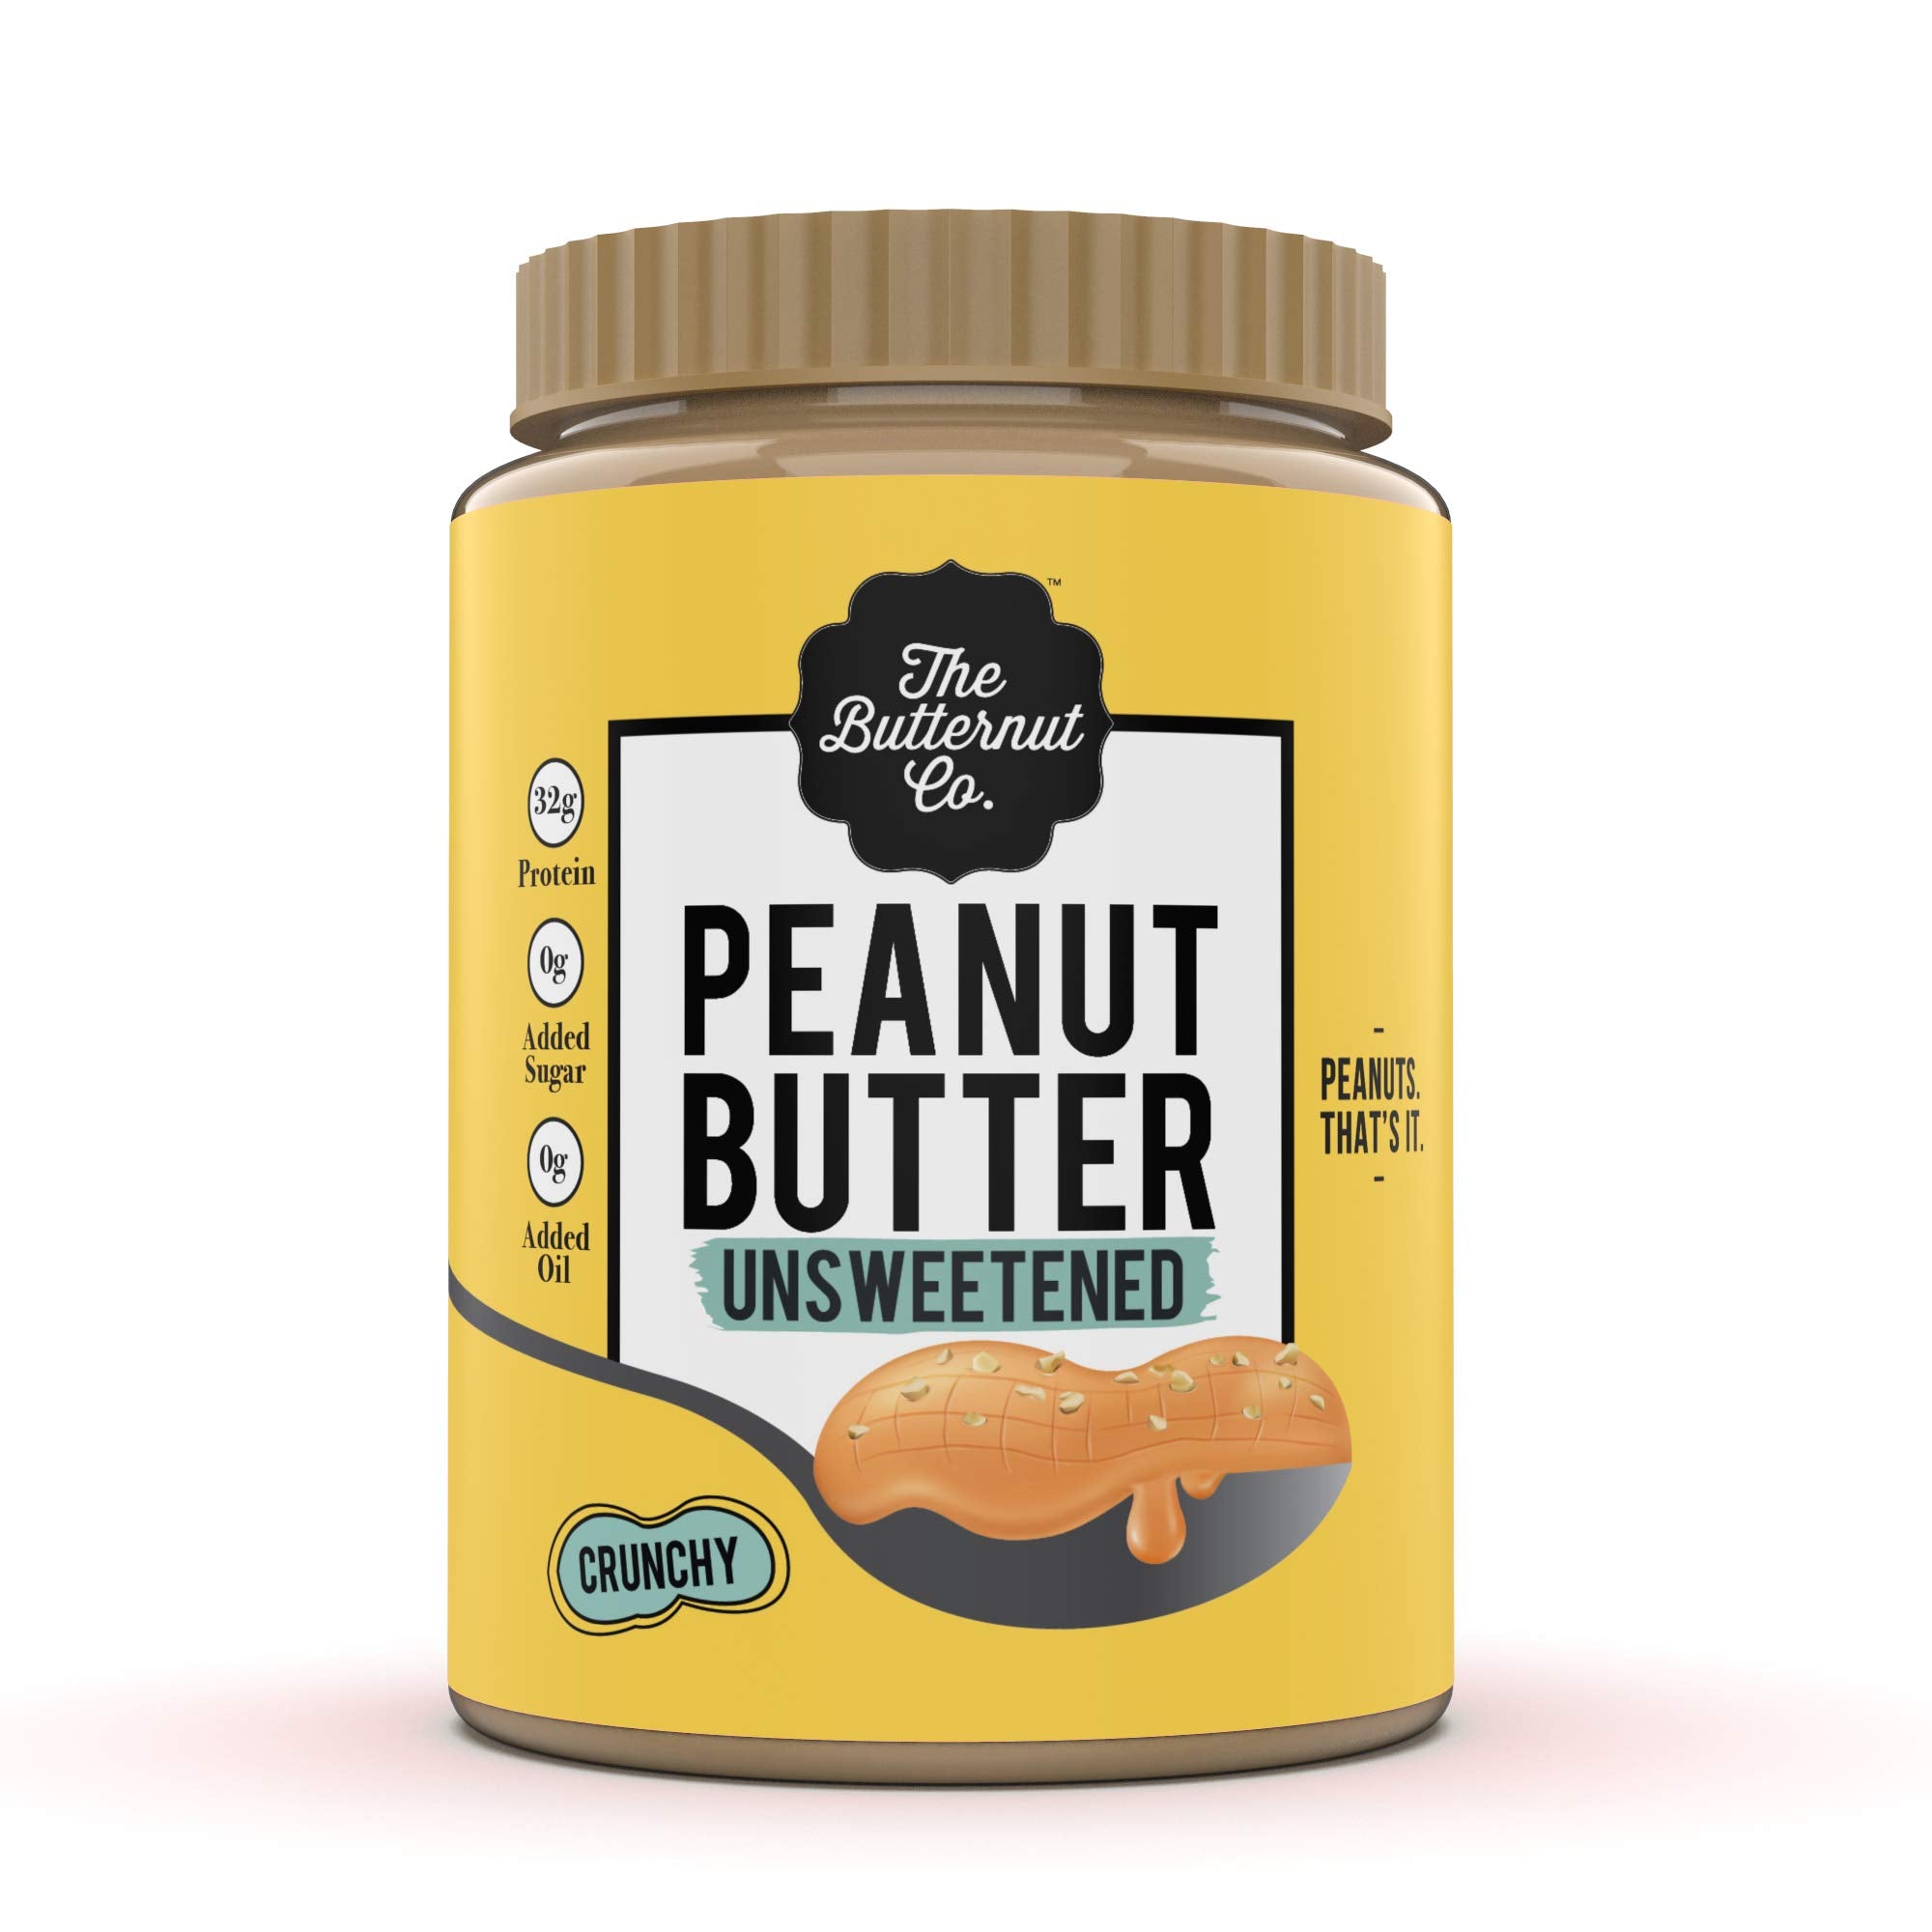 The Butternut Co. Natural Peanut Butter (Crunchy) 800 gm, Unsweetened, 32g Protein, No Added Sugar, 100% Peanuts, No Salt, High Protein Peanut Butter, Gluten Free, Vegan, Cholesterol Free